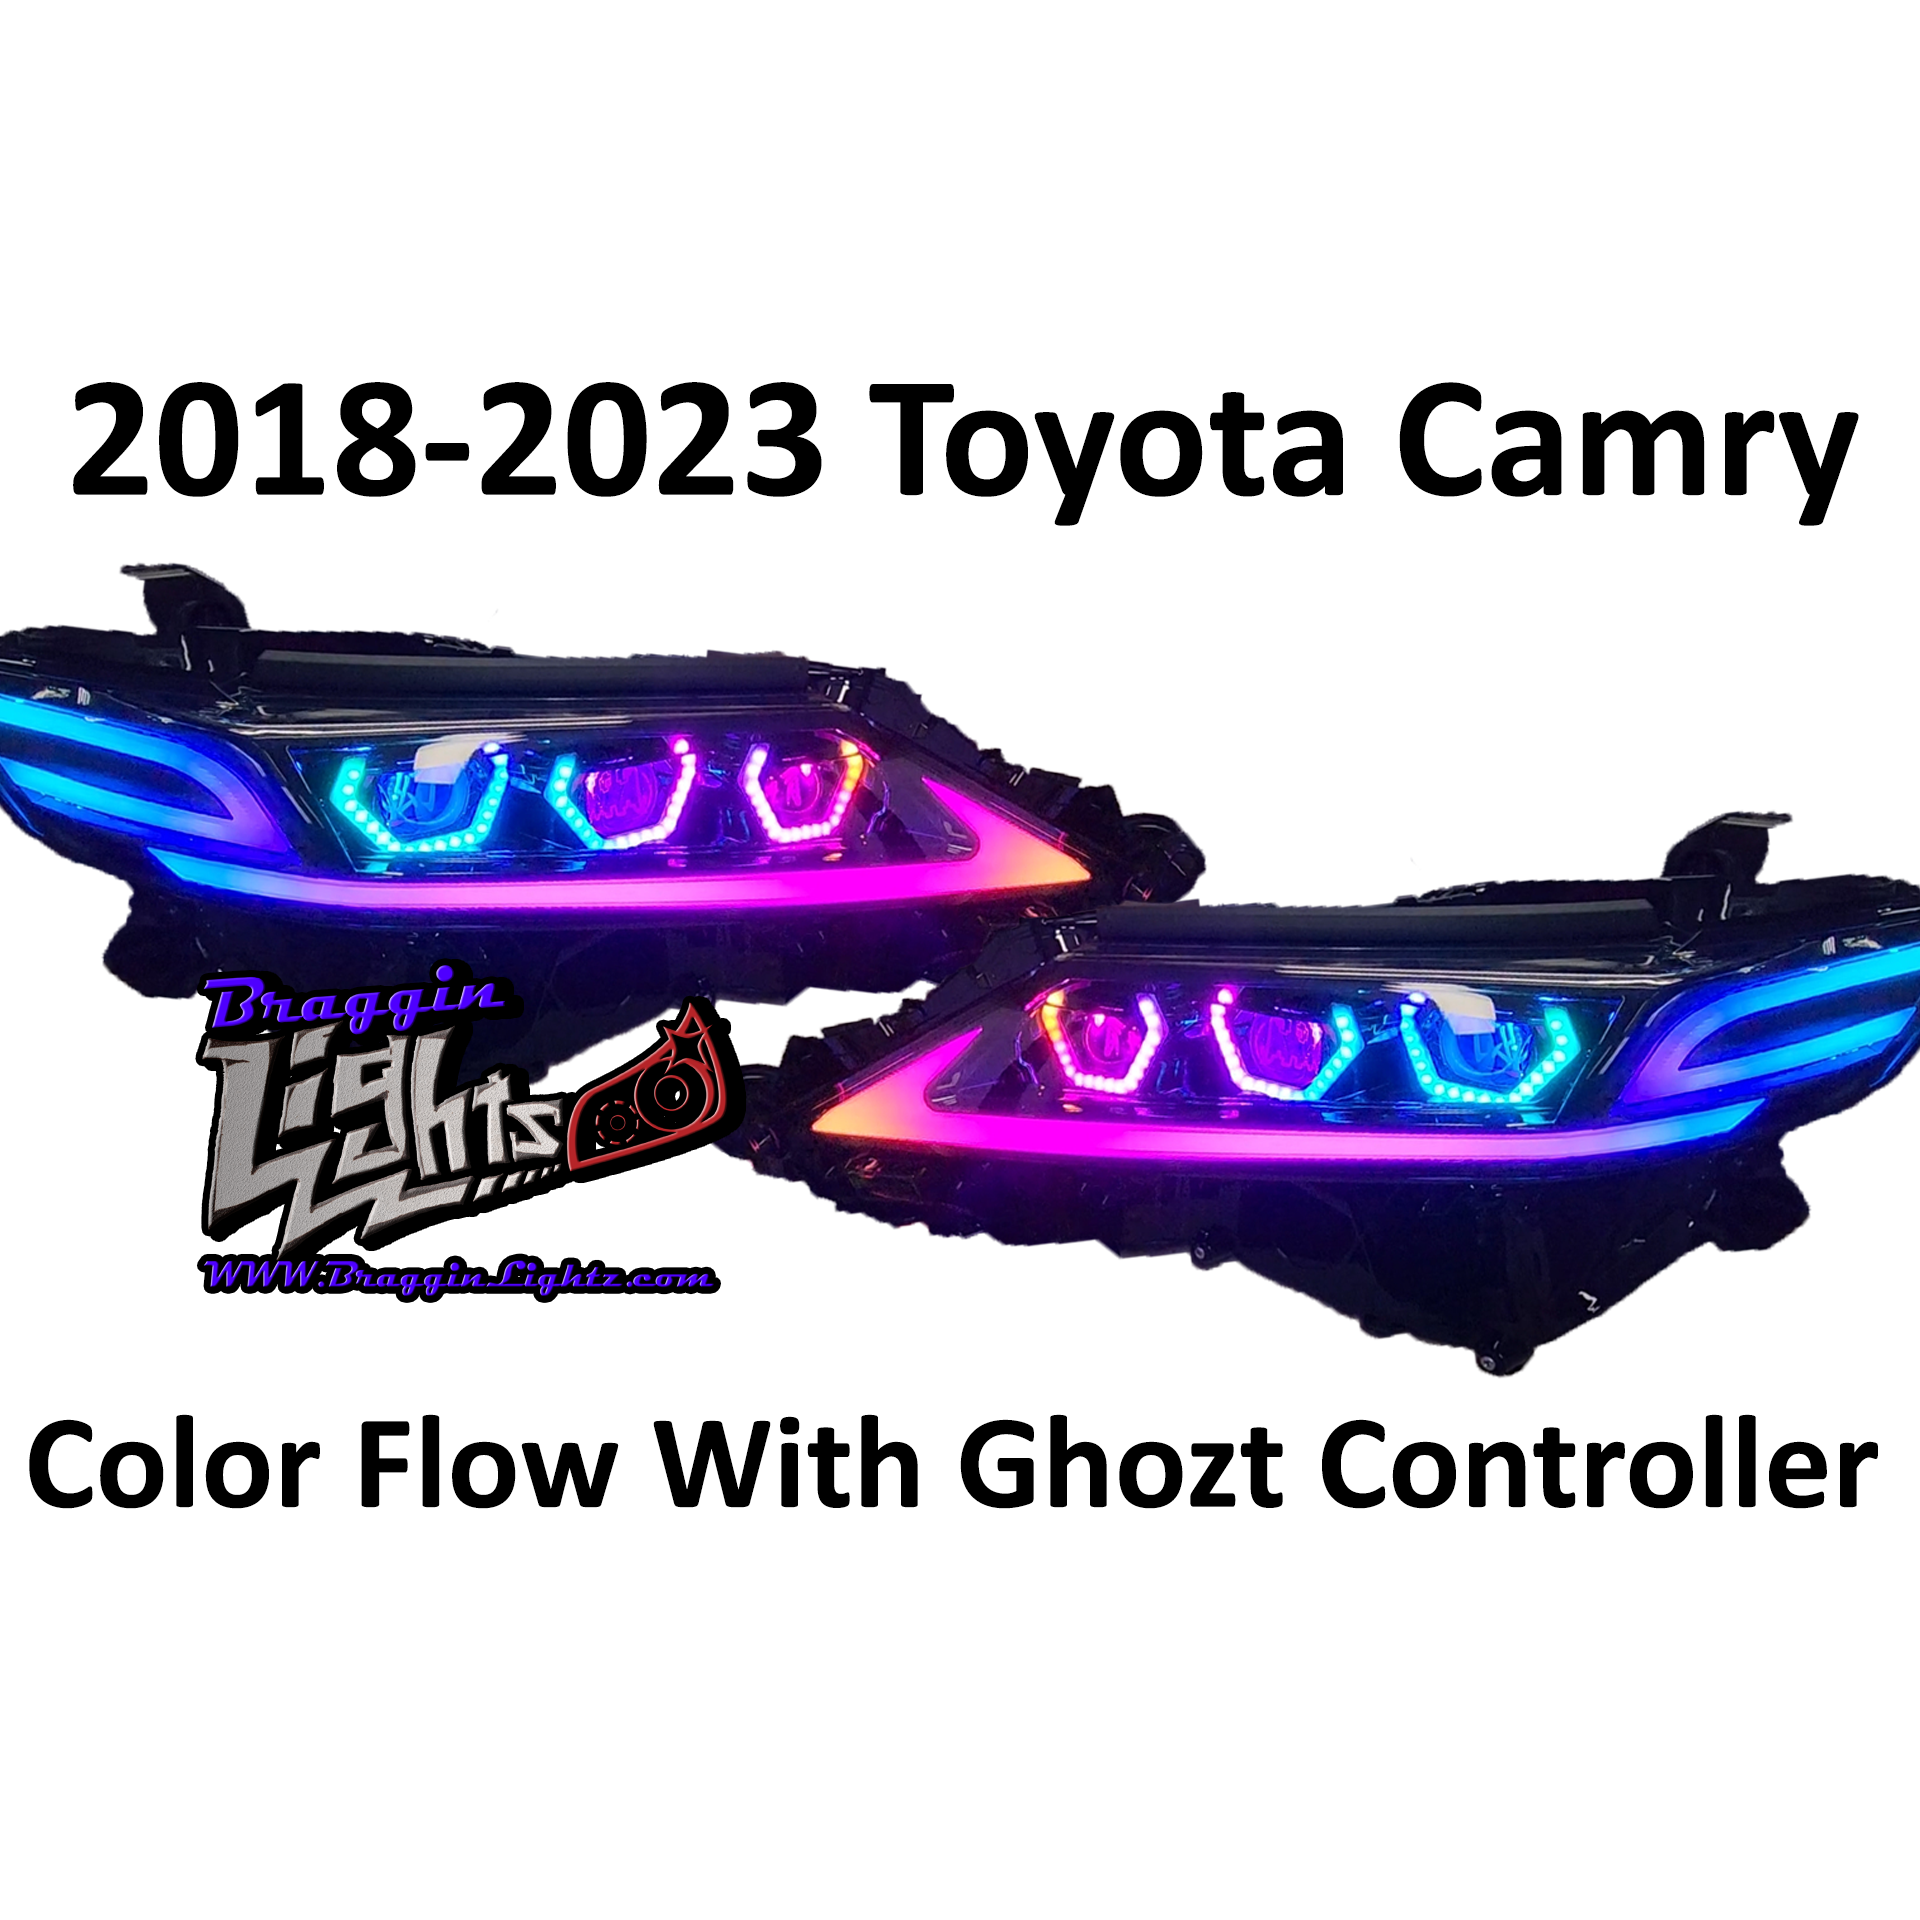 2018-2023 Toyota Camry Lexus Lights